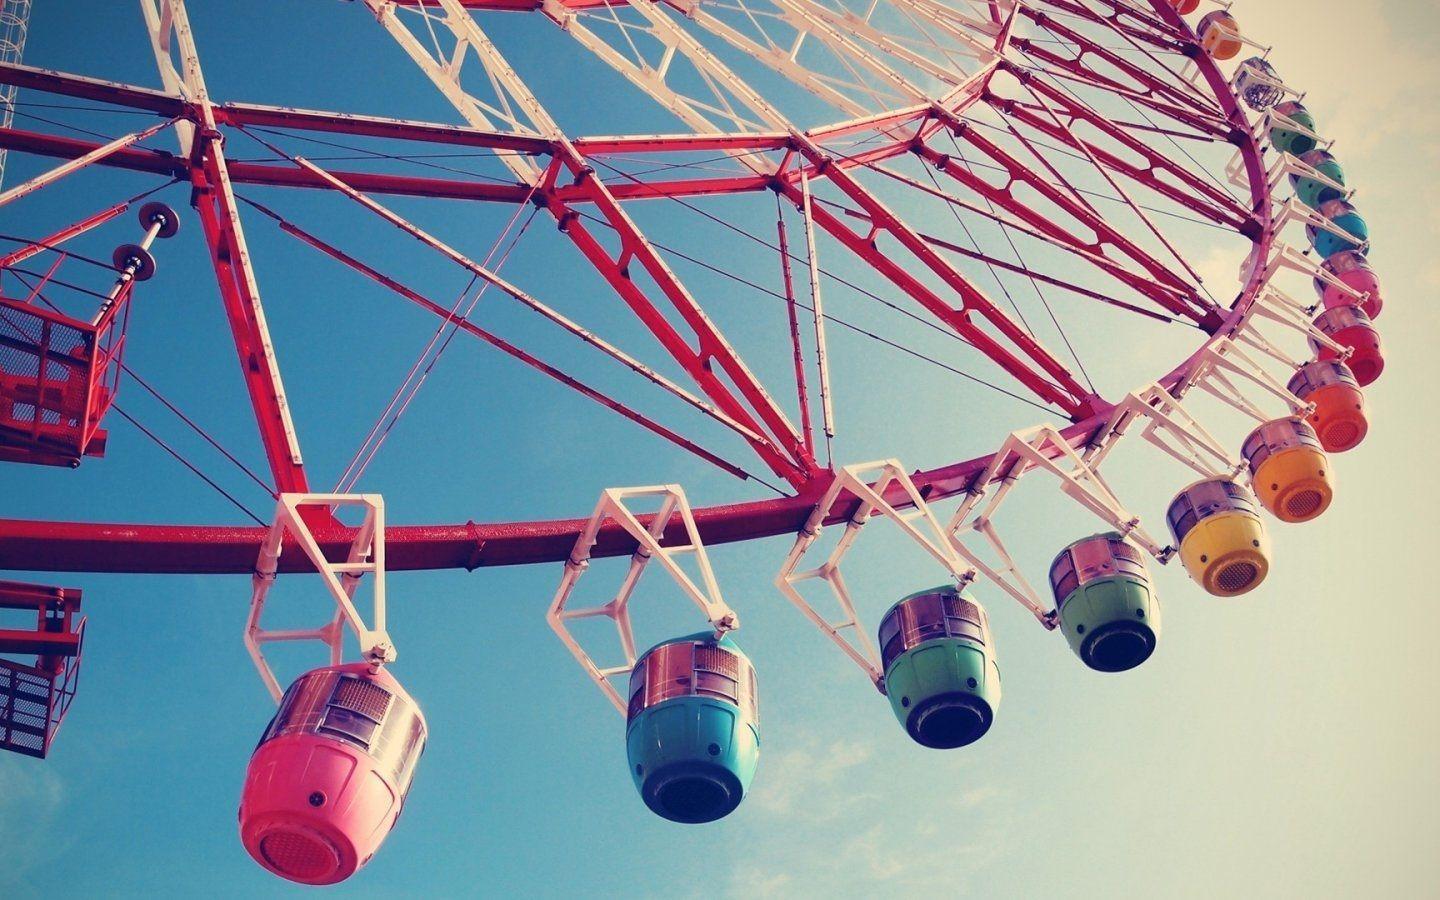 A colorful ferris wheel against a blue sky. - 1440x900